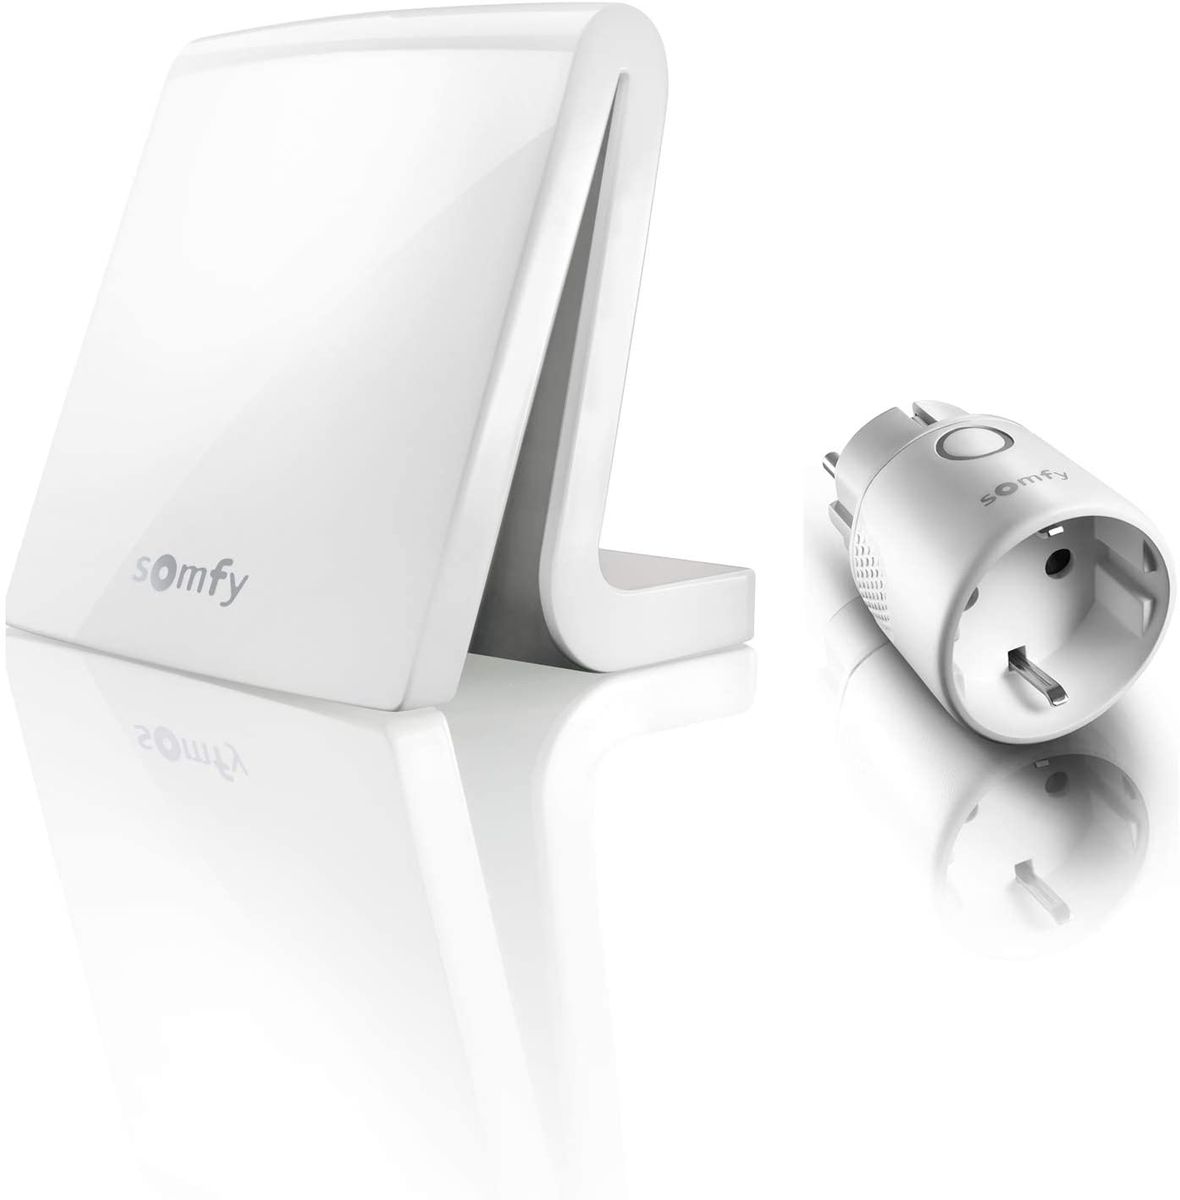 Somfy - 1870903 - Tahoma Box and Plug io - Home automation - Type F plug - Compatible with Google Home and Amazon Alexa